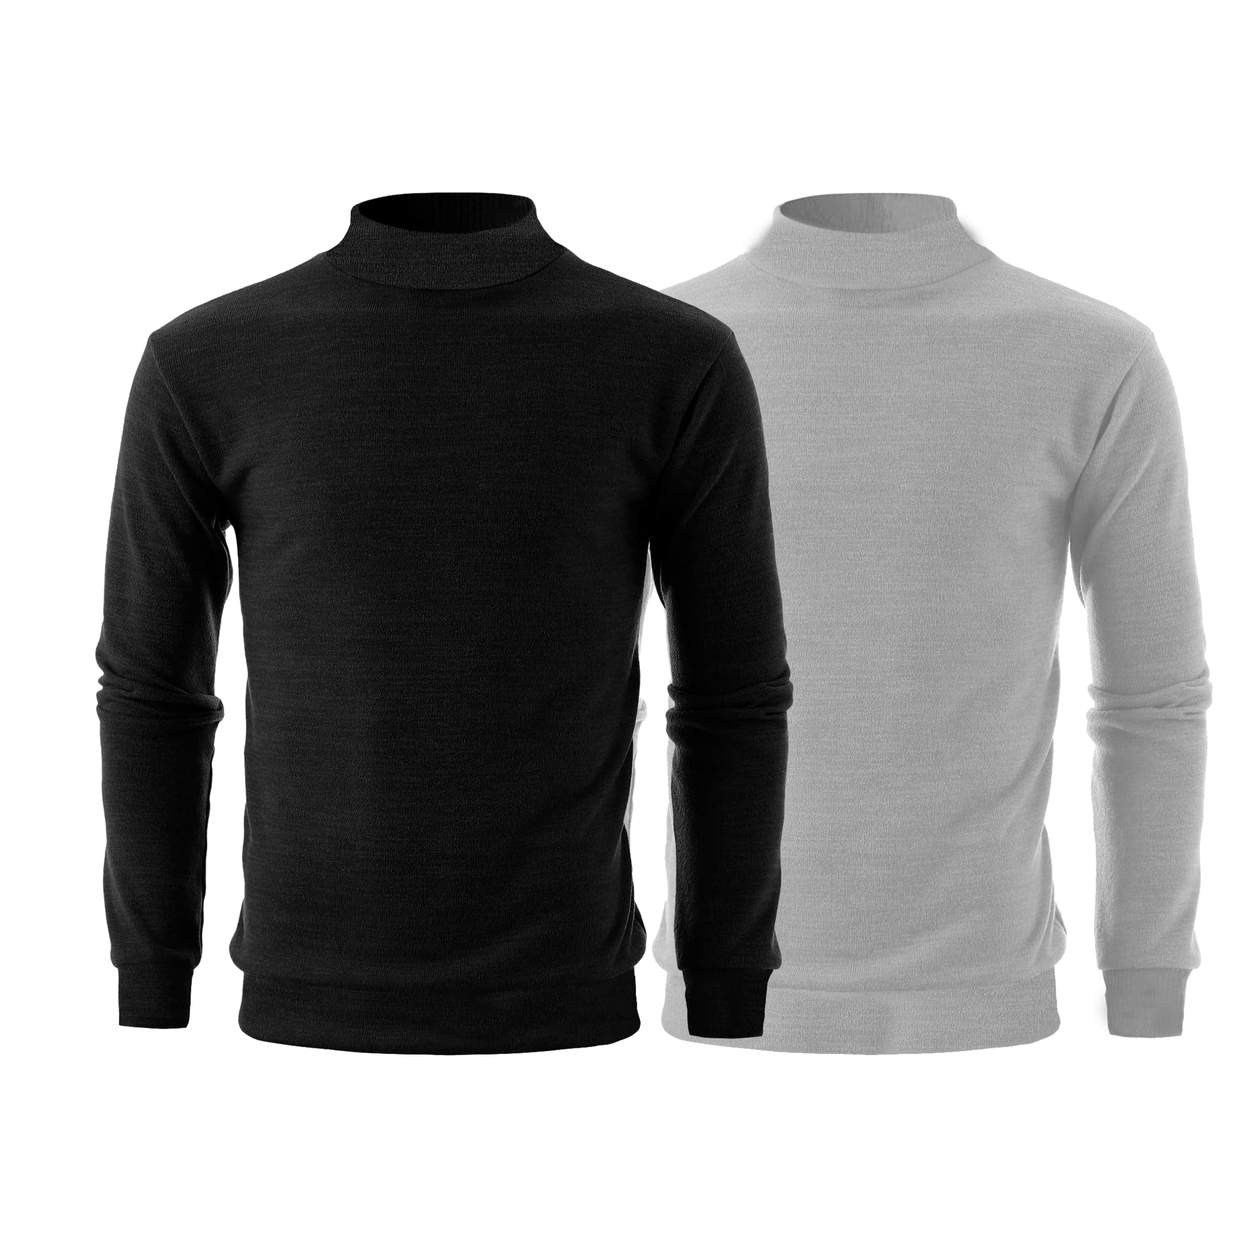 2-Pack: Men's Winter Warm Cozy Knit Slim Fit Mock Neck Sweater - White & Grey, Medium